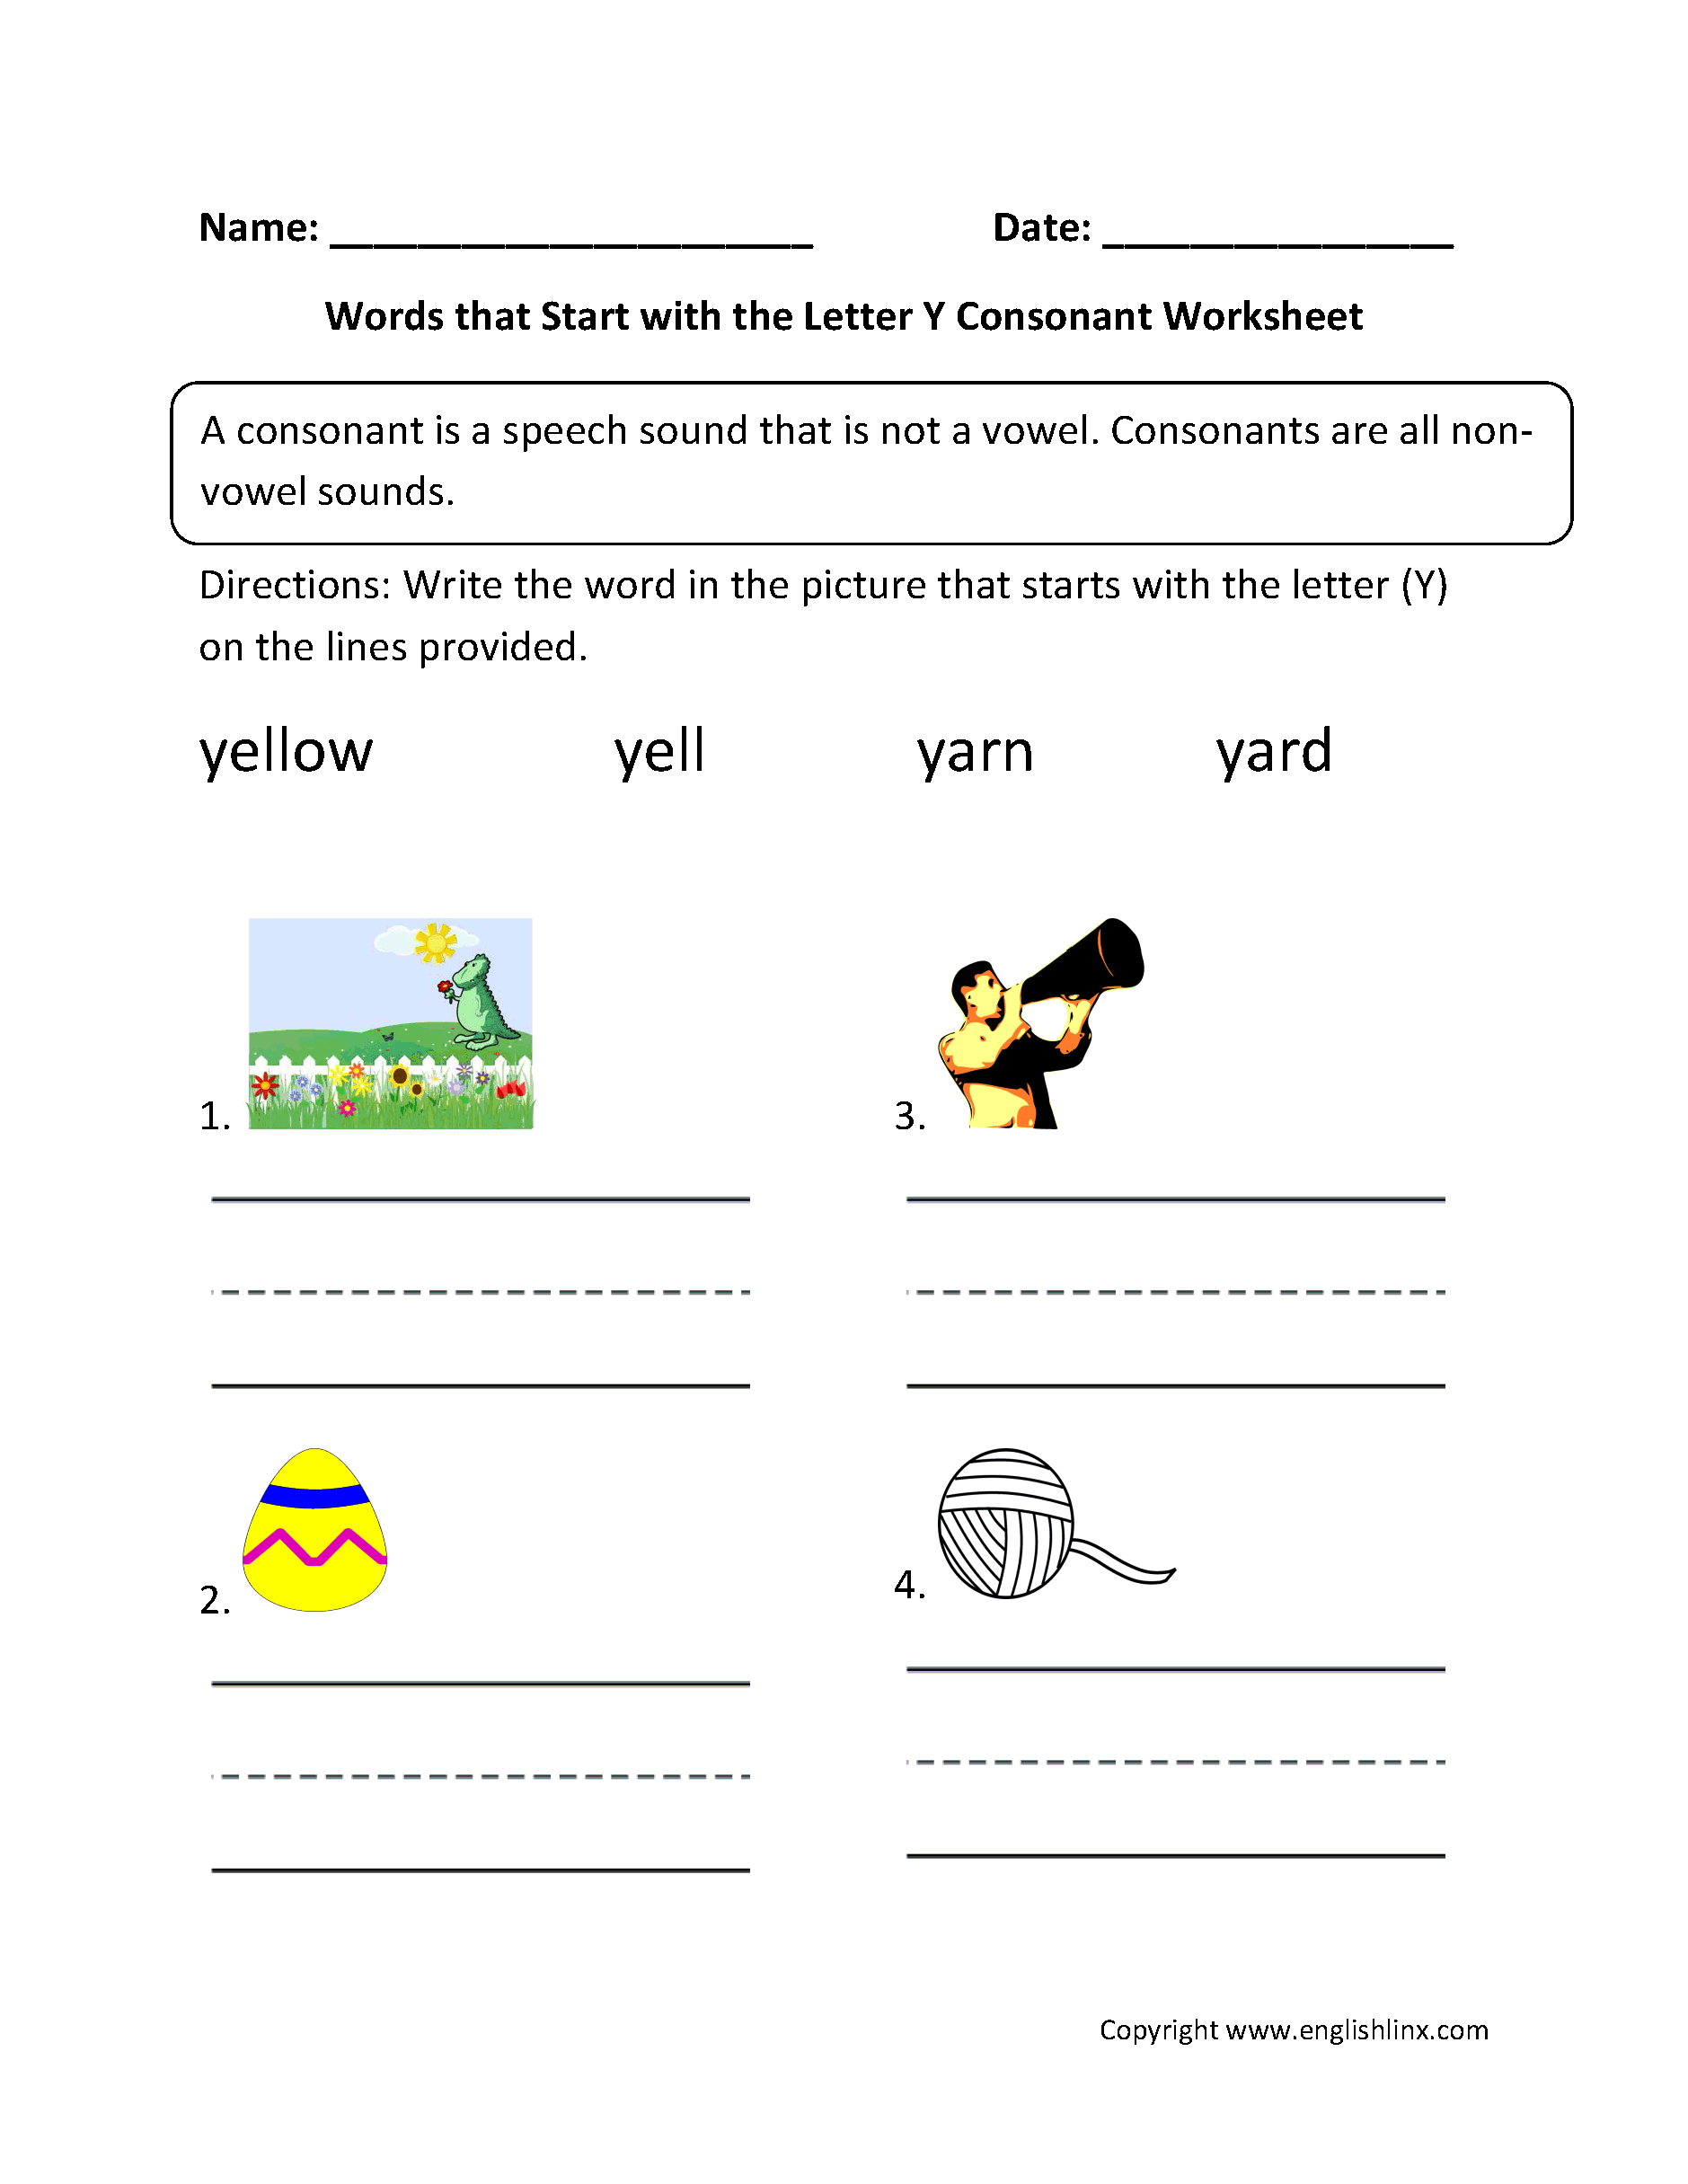 phonics-worksheets-consonant-worksheets